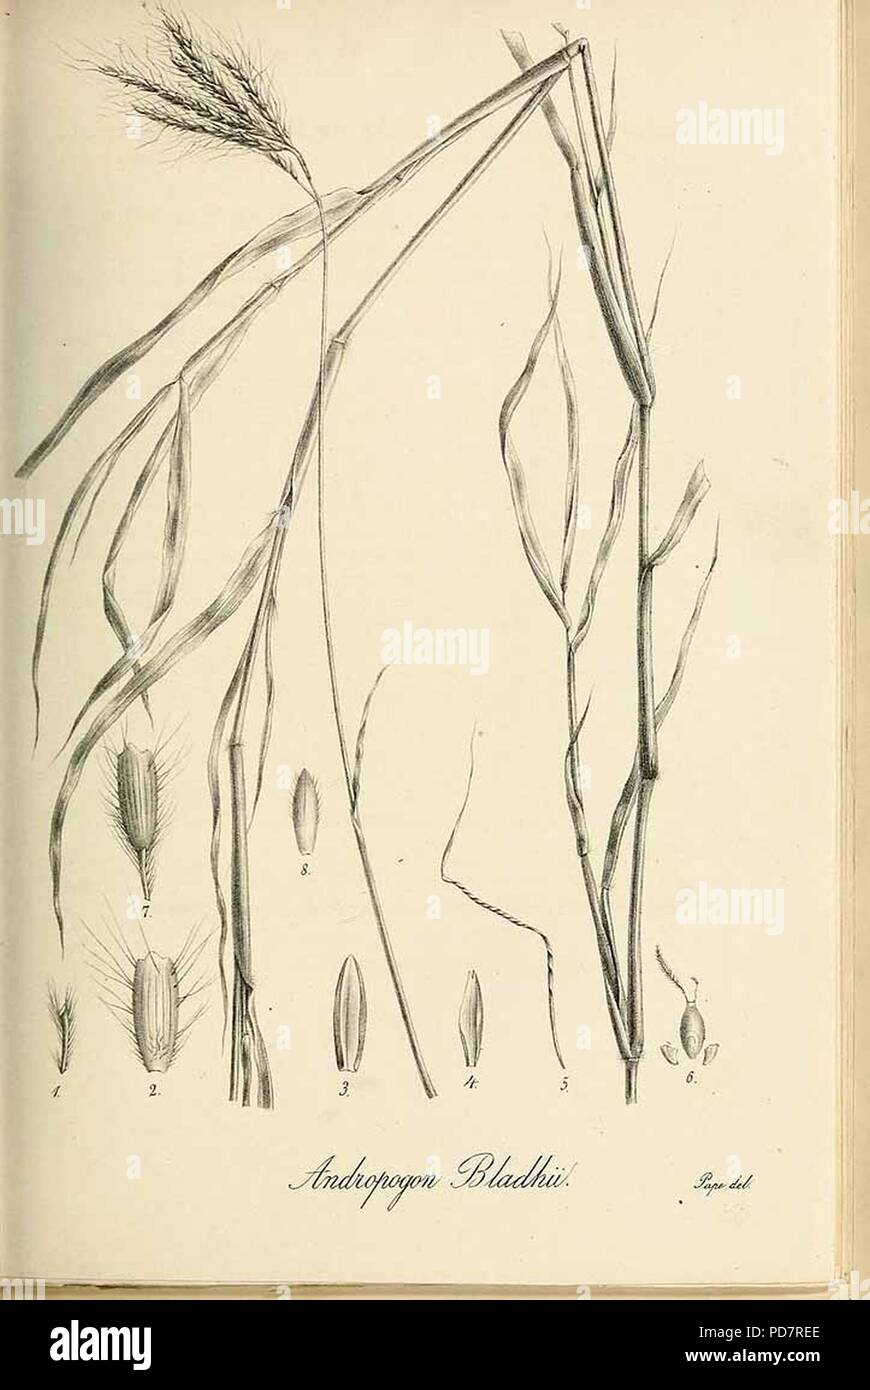 Andropogon bladhii - Species graminum - Volume 3. Stock Photo